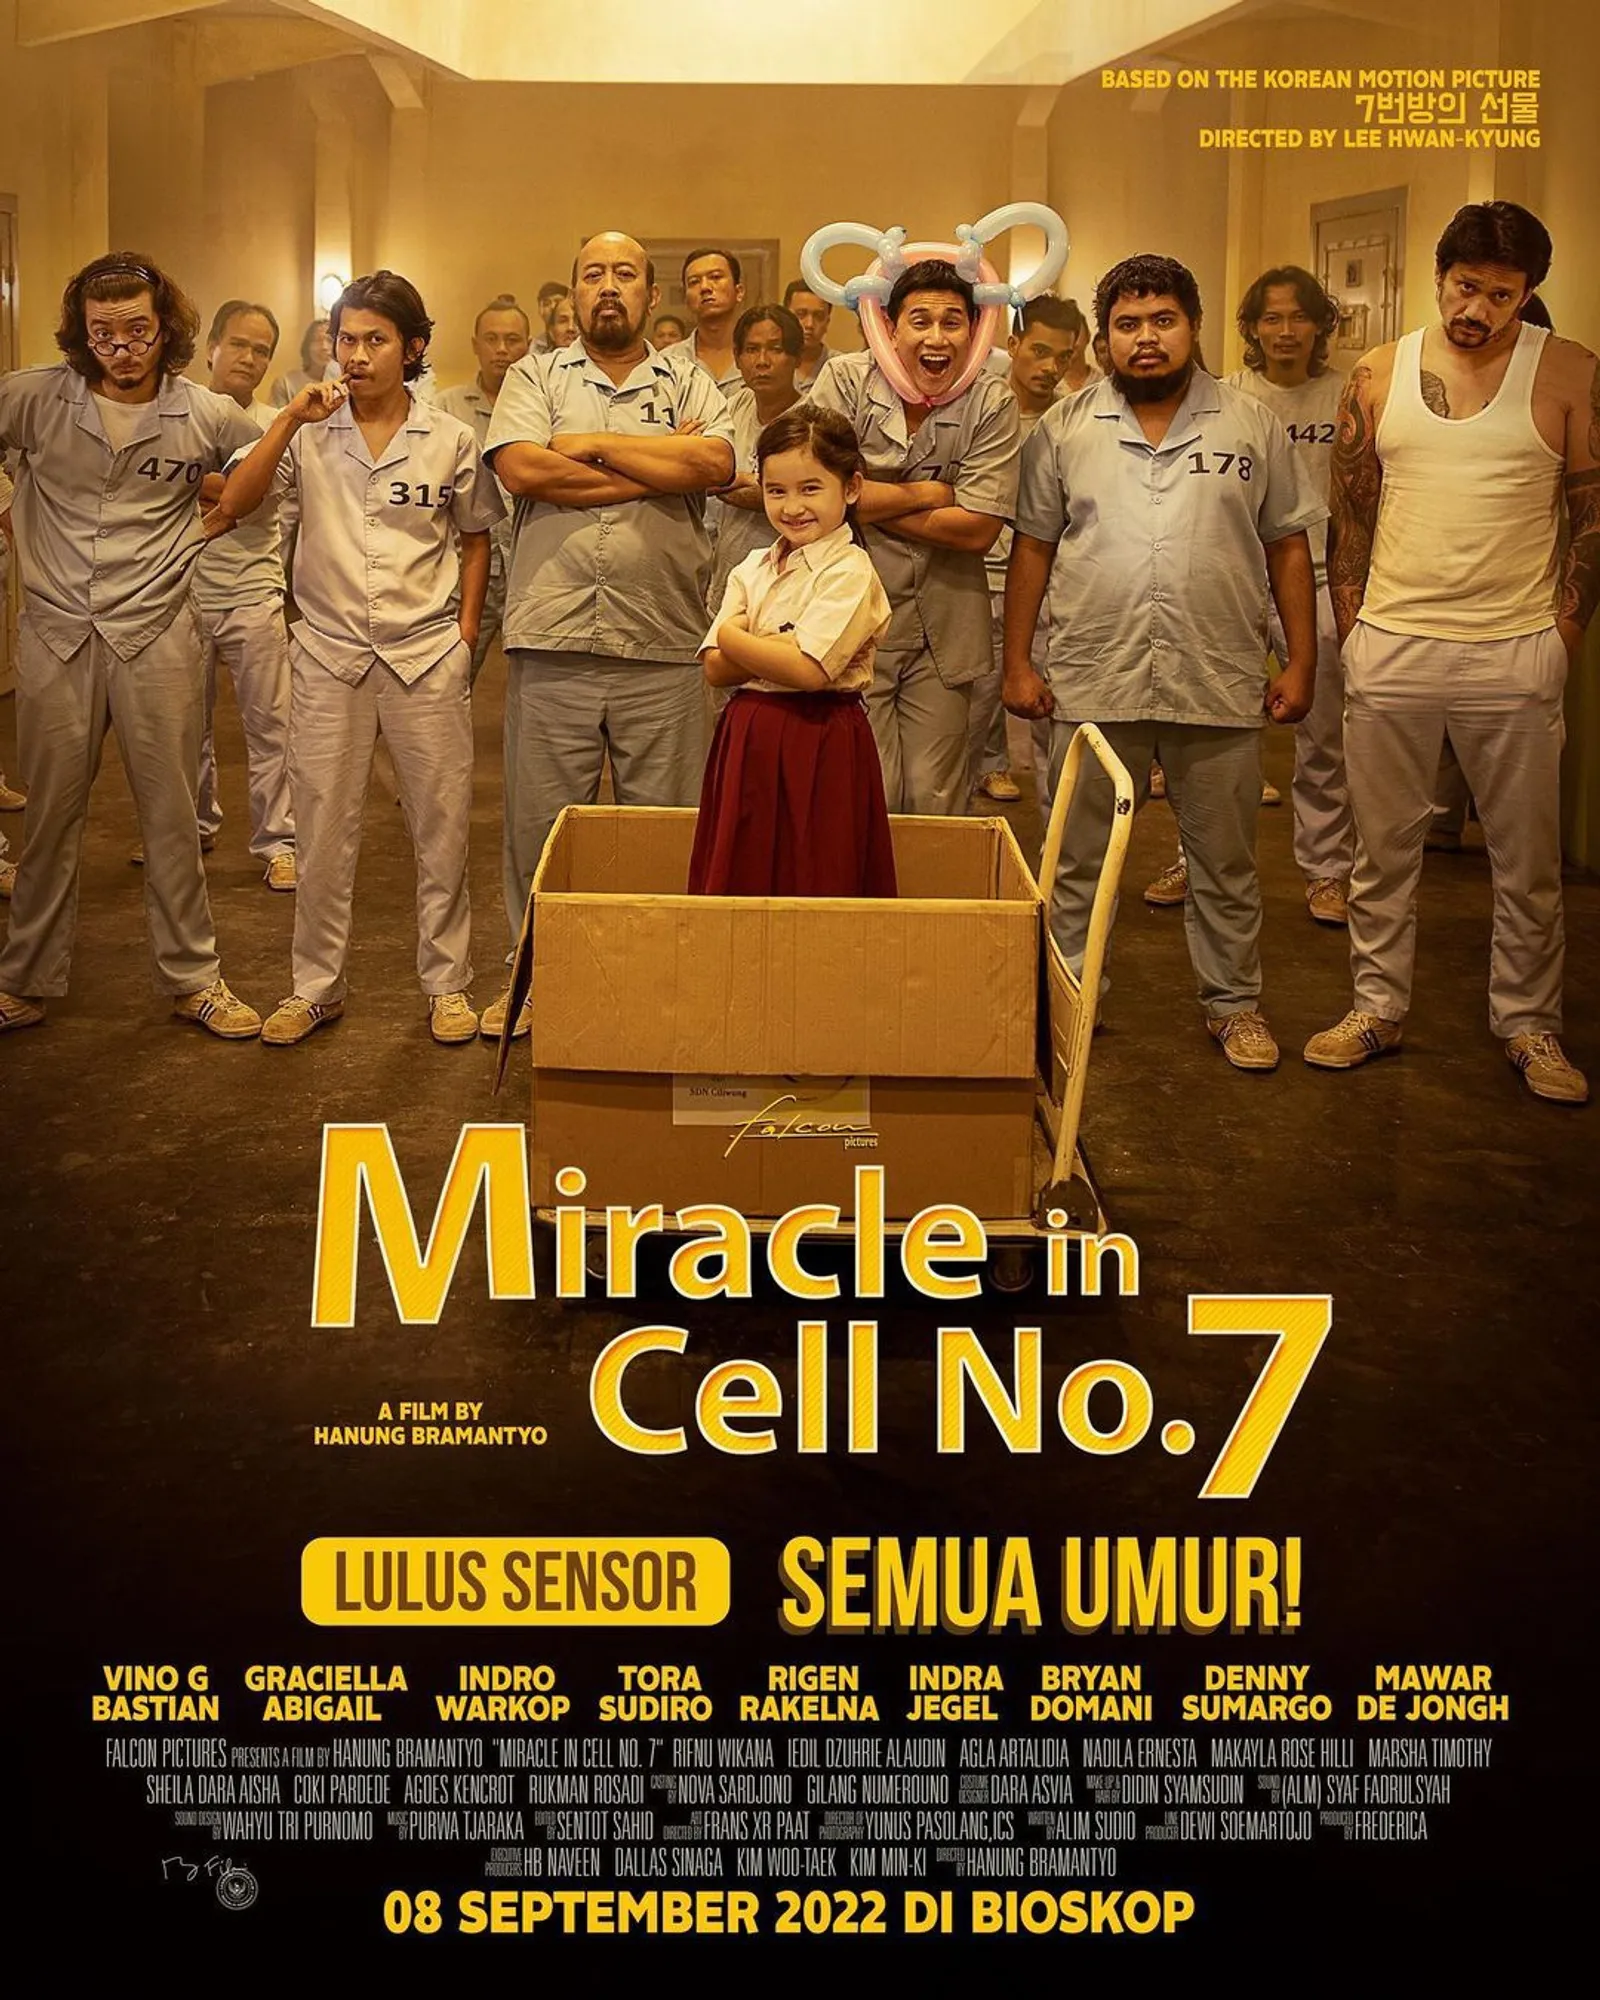 Menilik Pemeran Utama 'Miracle in Cell No. 7', Profil Vino G. Bastian